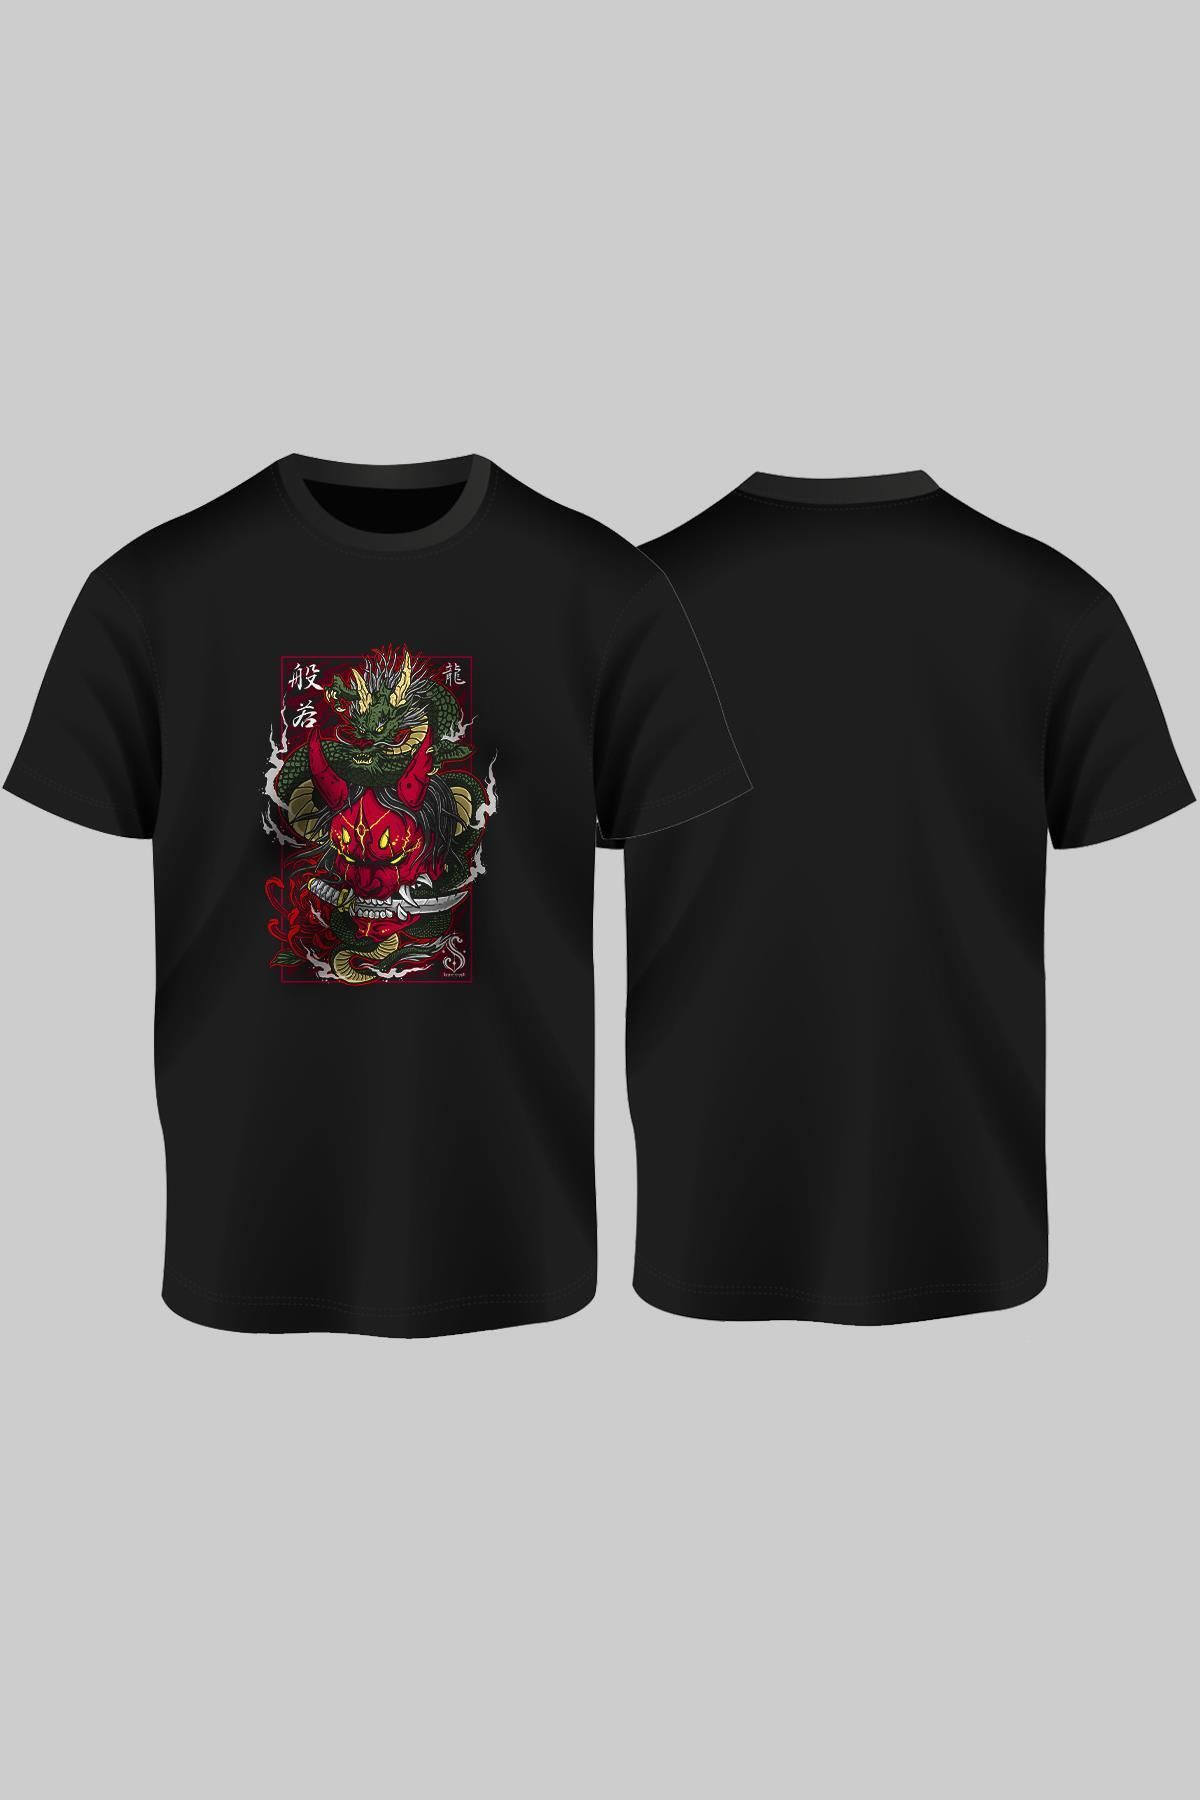 TSHIRT35 Dragon Samuray Baskılı Siyah Unisex Tişört